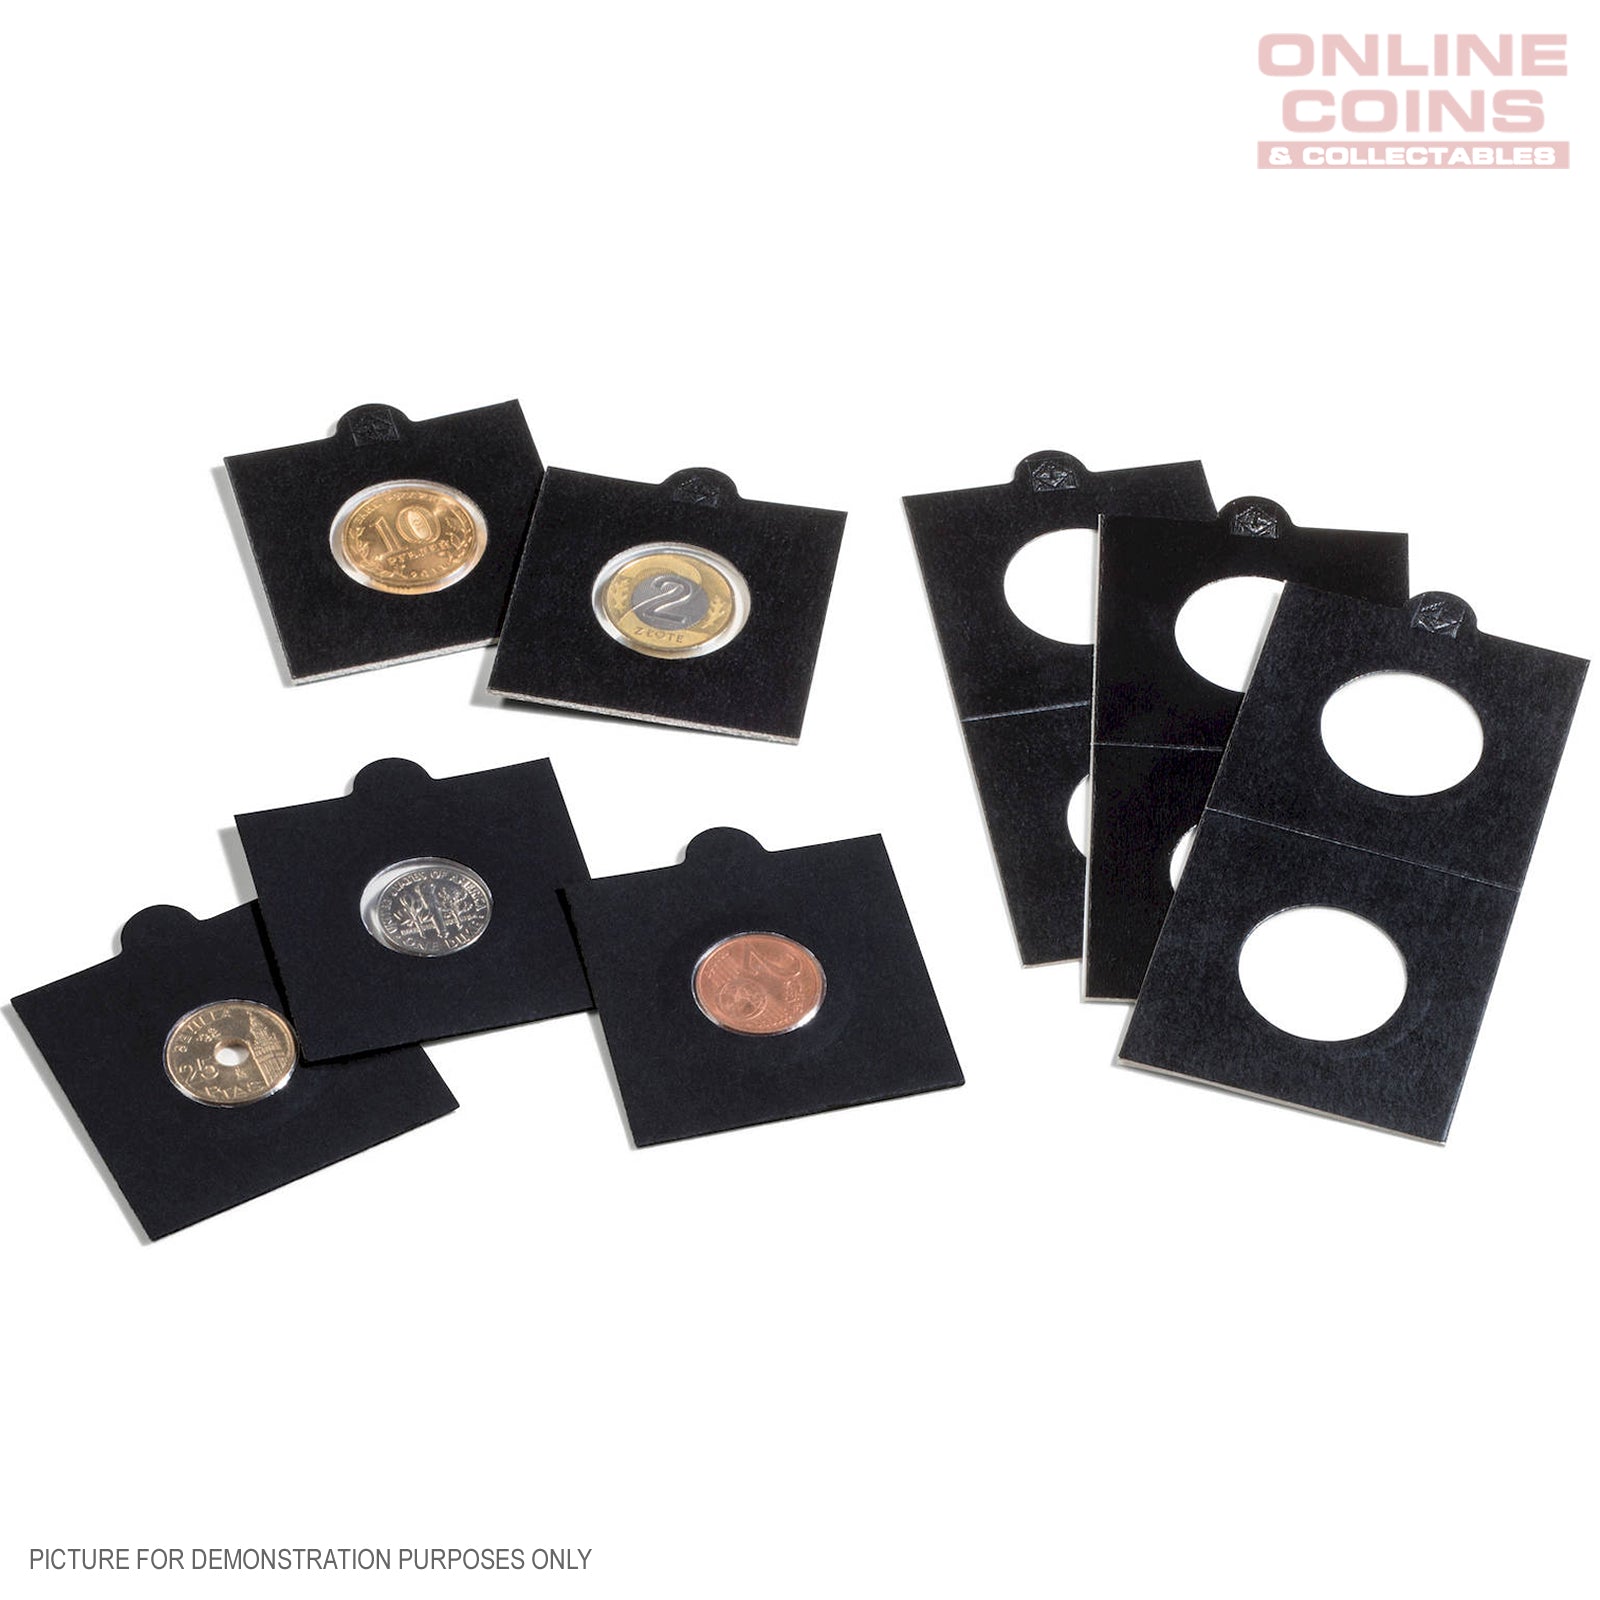 Lighthouse MATRIX BLACK 22.5mm Self Adhesive 2"x2" MATRIX Coin Holders x 25 - 2c & $2